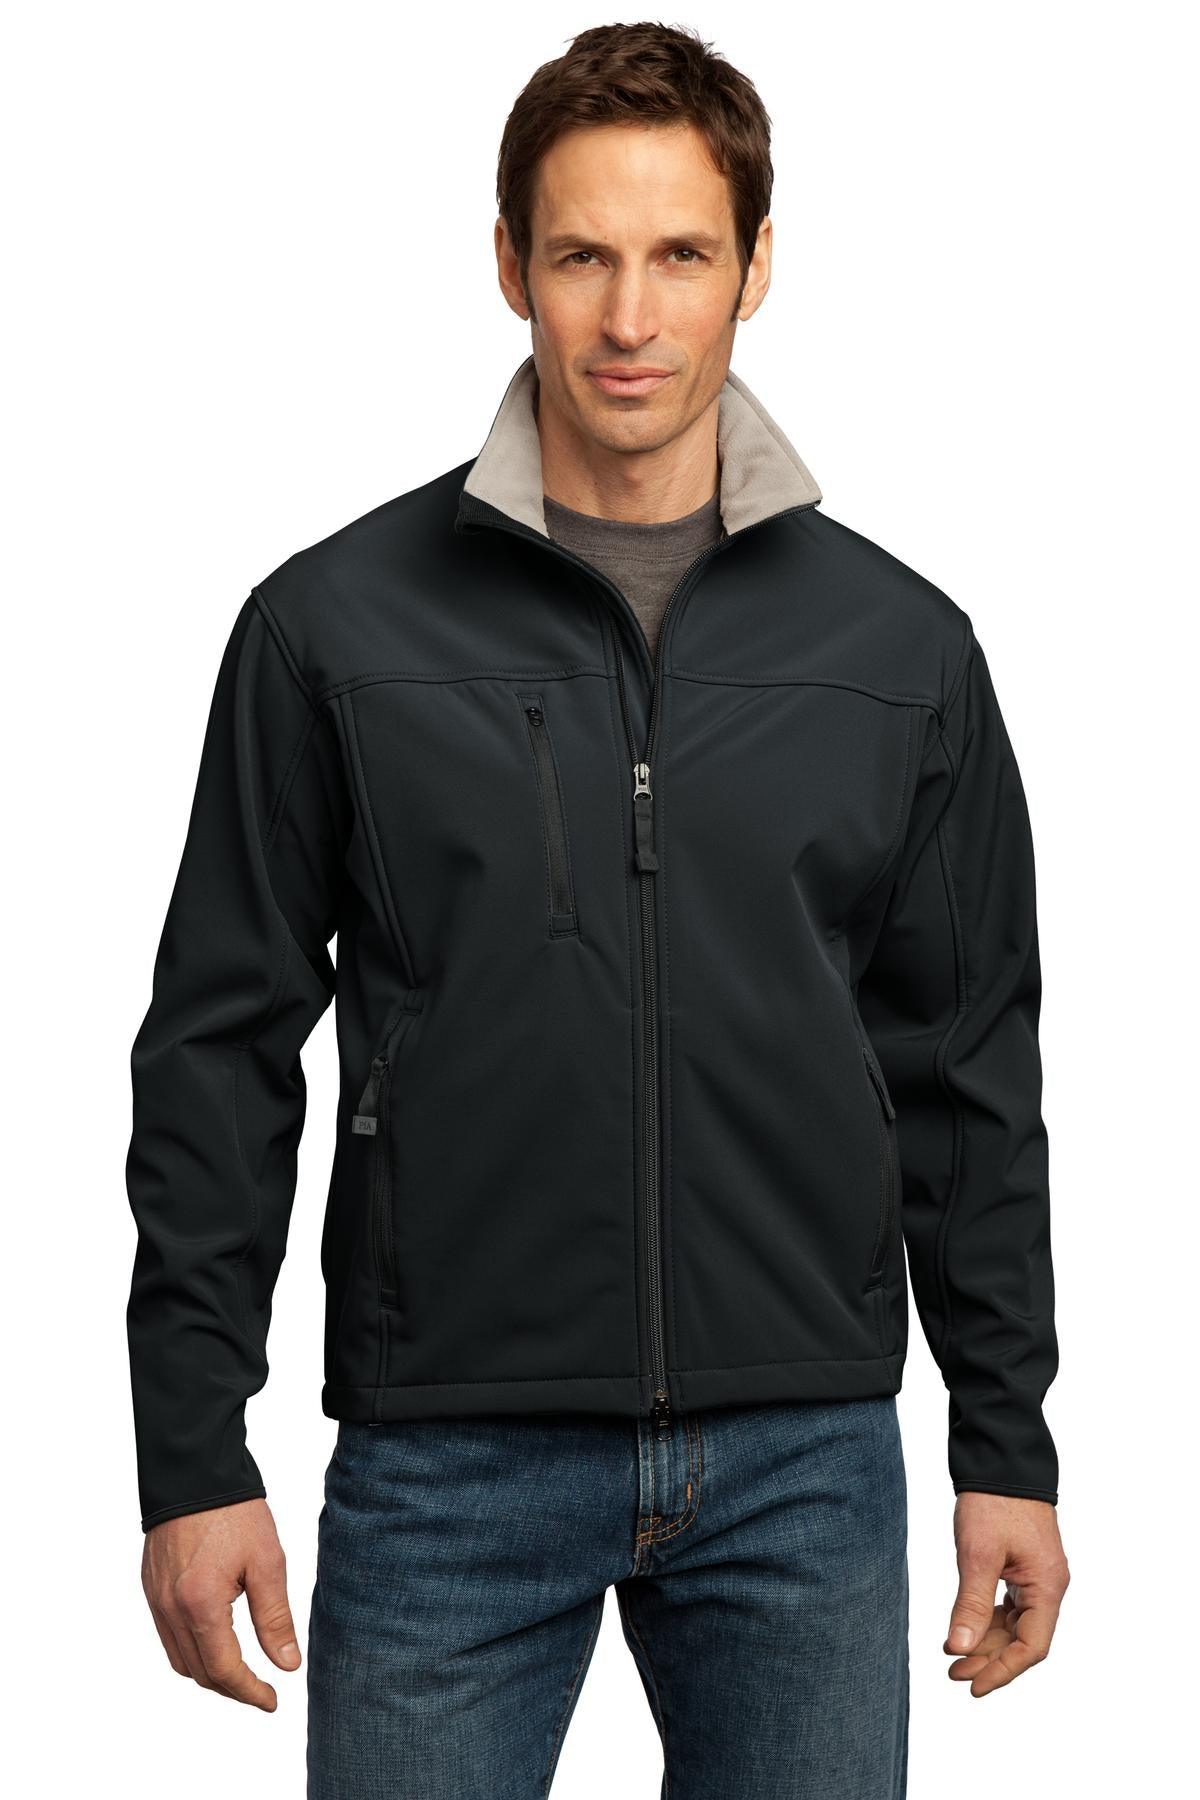 Port Authority Tall Glacier Soft Shell Jacket. TLJ790 - Dresses Max